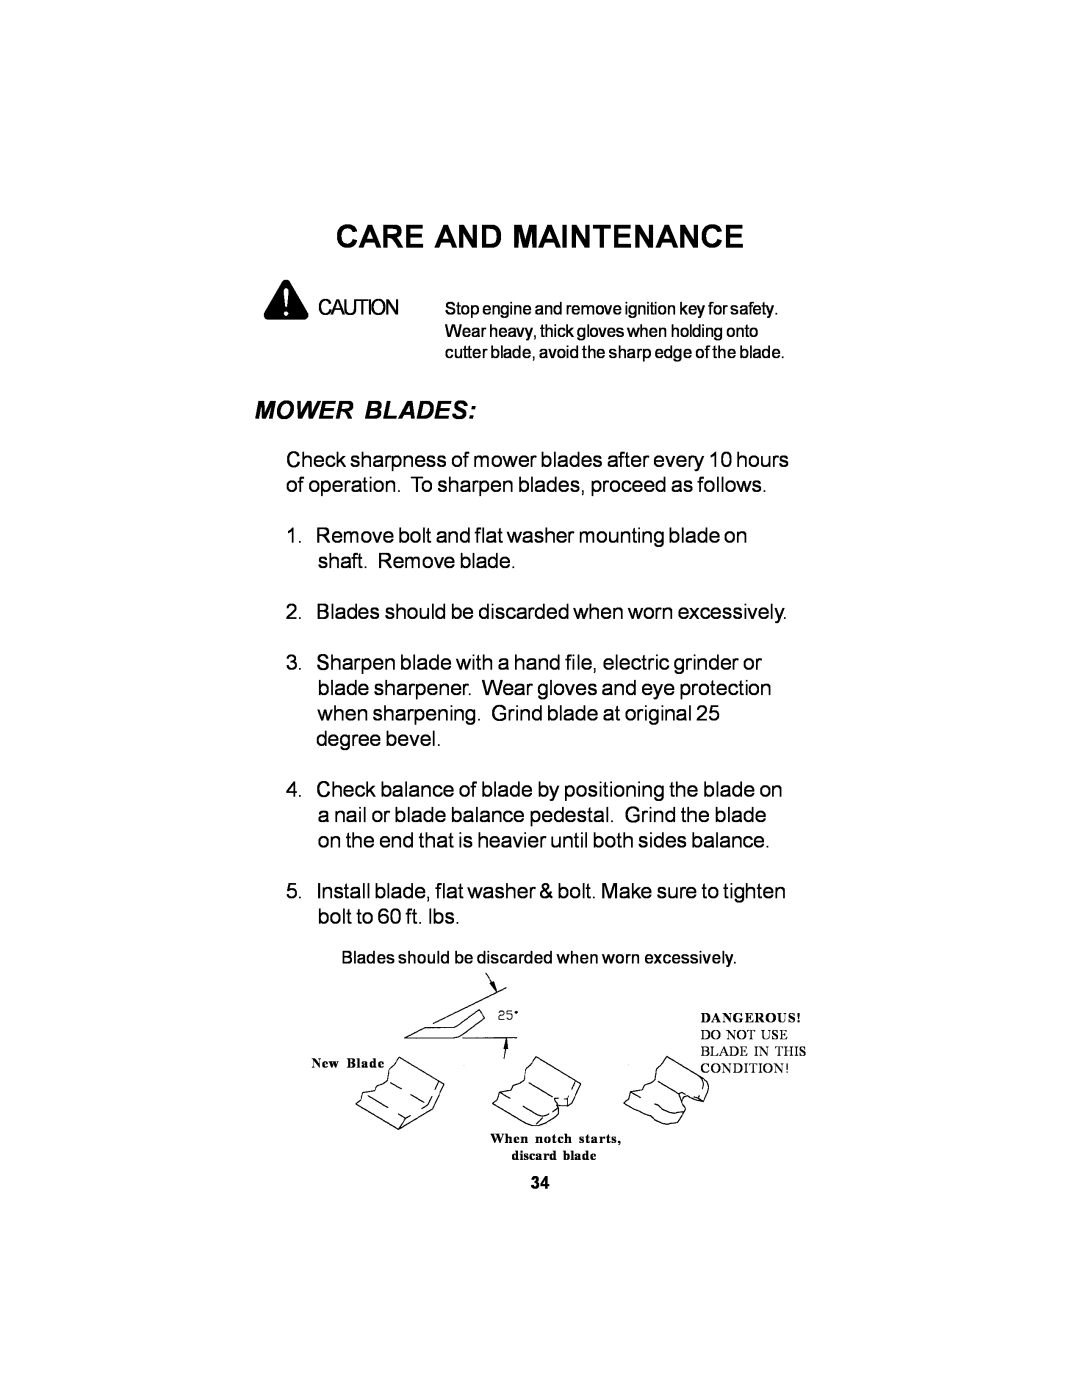 Dixon 12881-106 manual Mower Blades, Care And Maintenance 